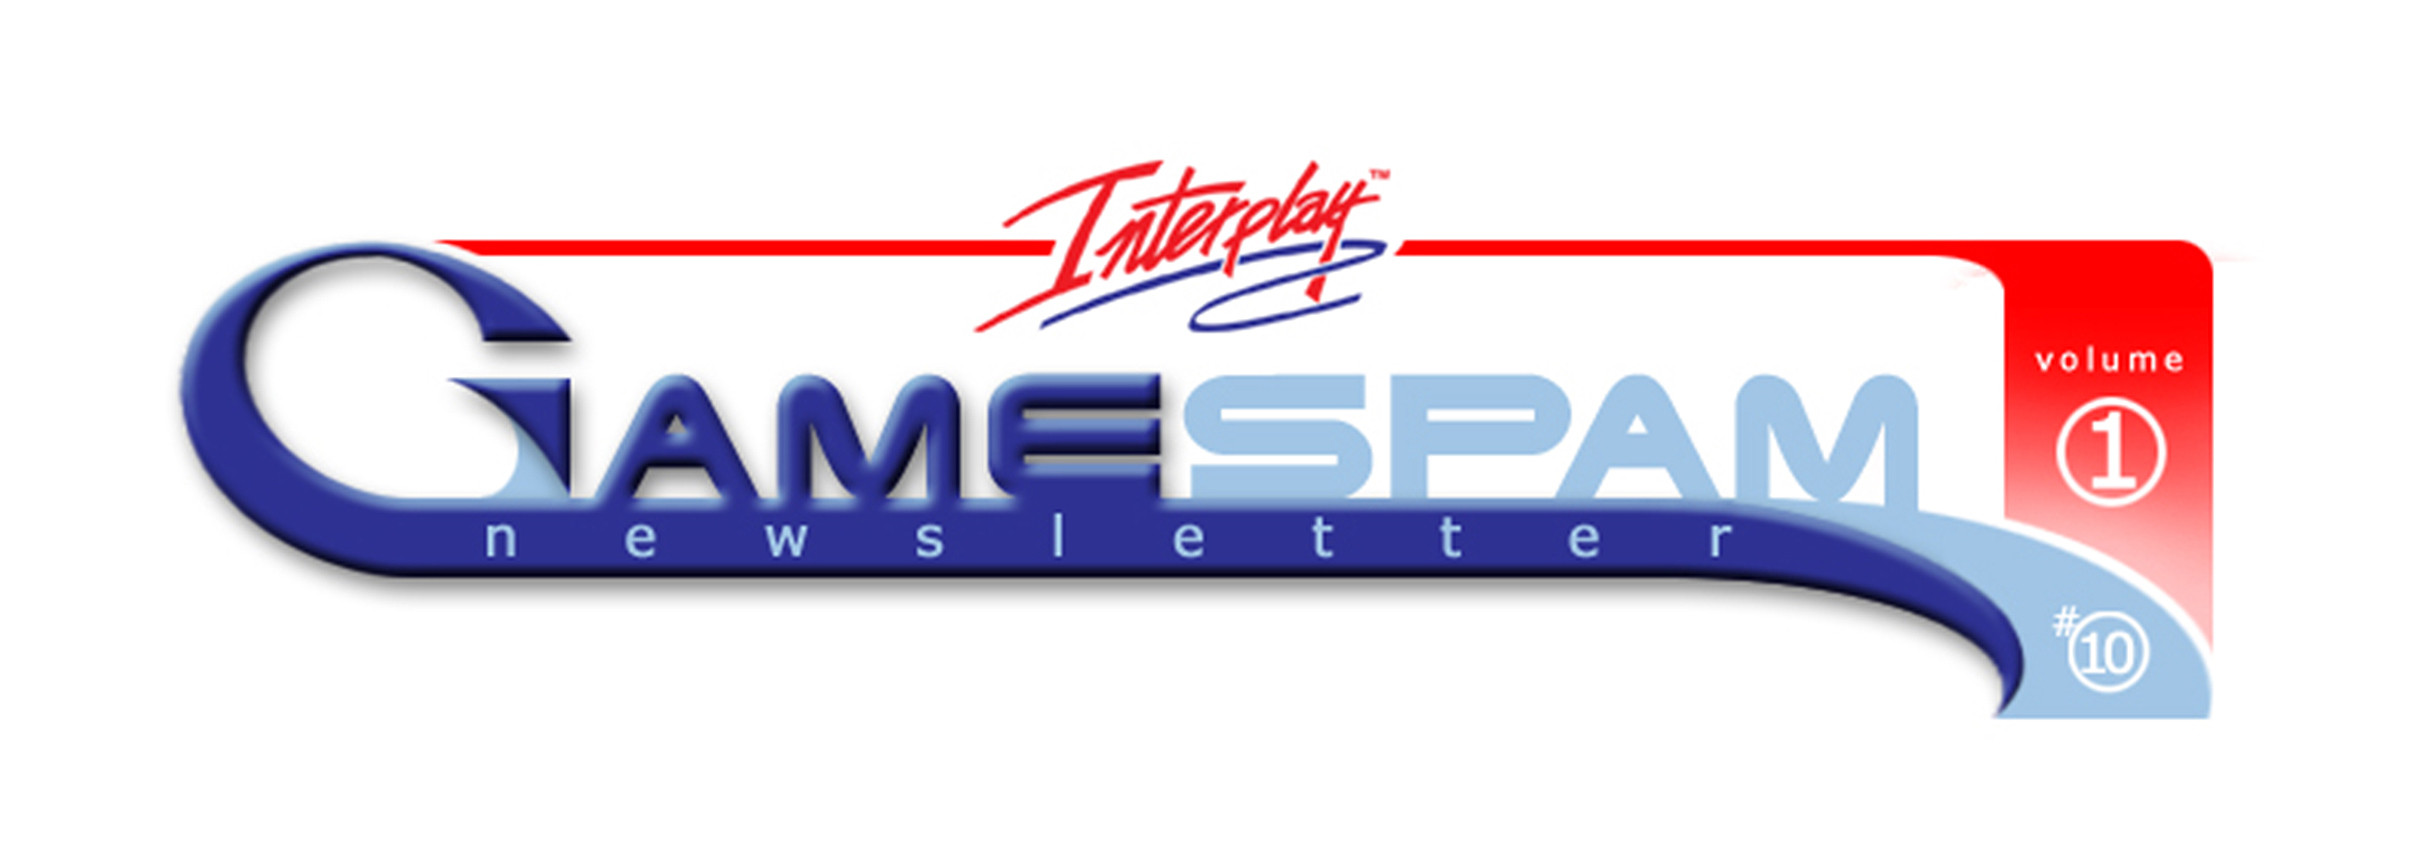 Gamespam Newsletter Masthead Logo